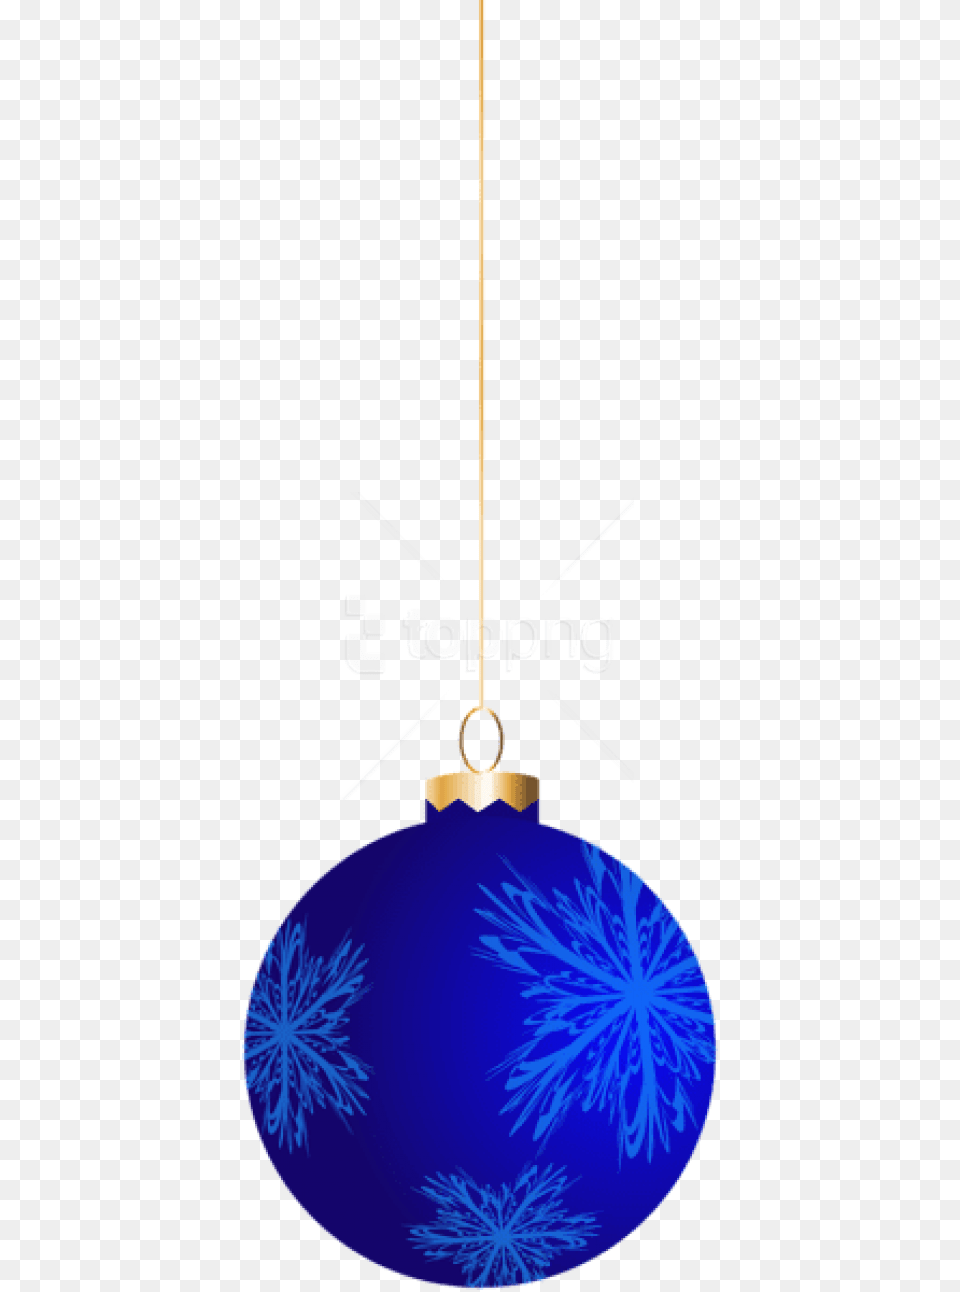 Blue Christmas Ball Sinie Novogodnie Shari, Lighting, Lamp, Chandelier, Accessories Free Transparent Png